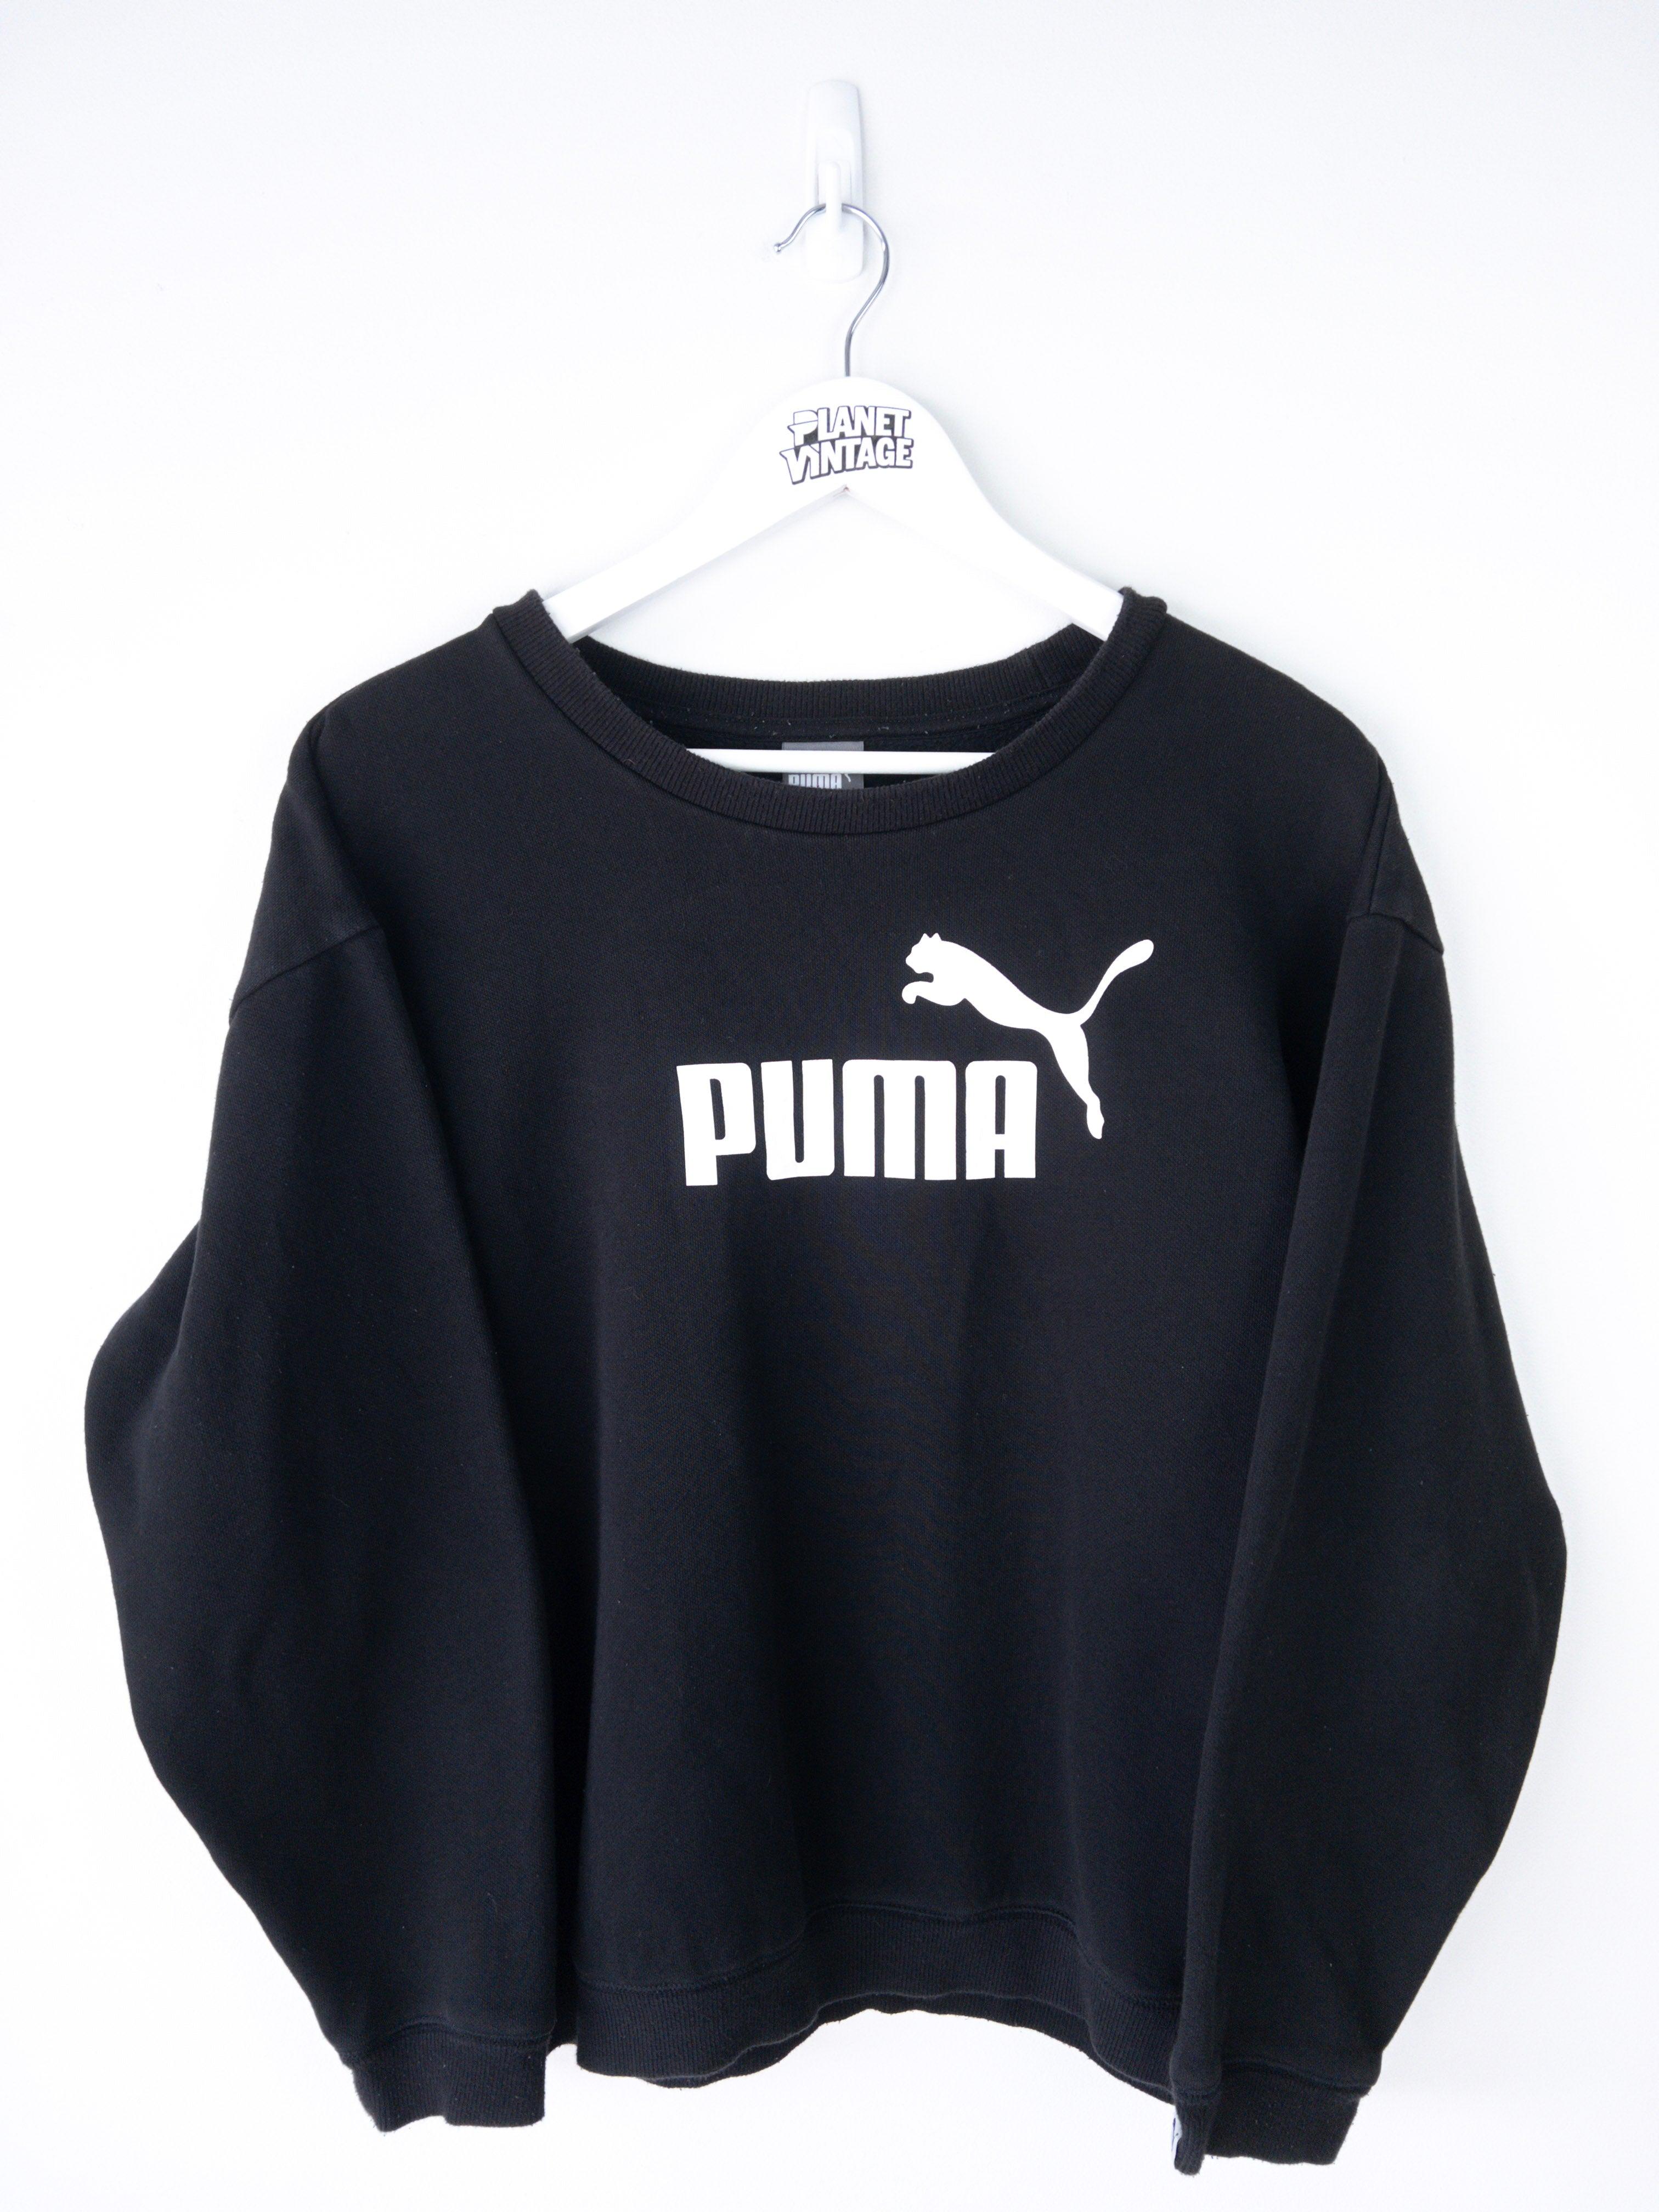 Puma Sweatshirt (M) - Planet Vintage Store